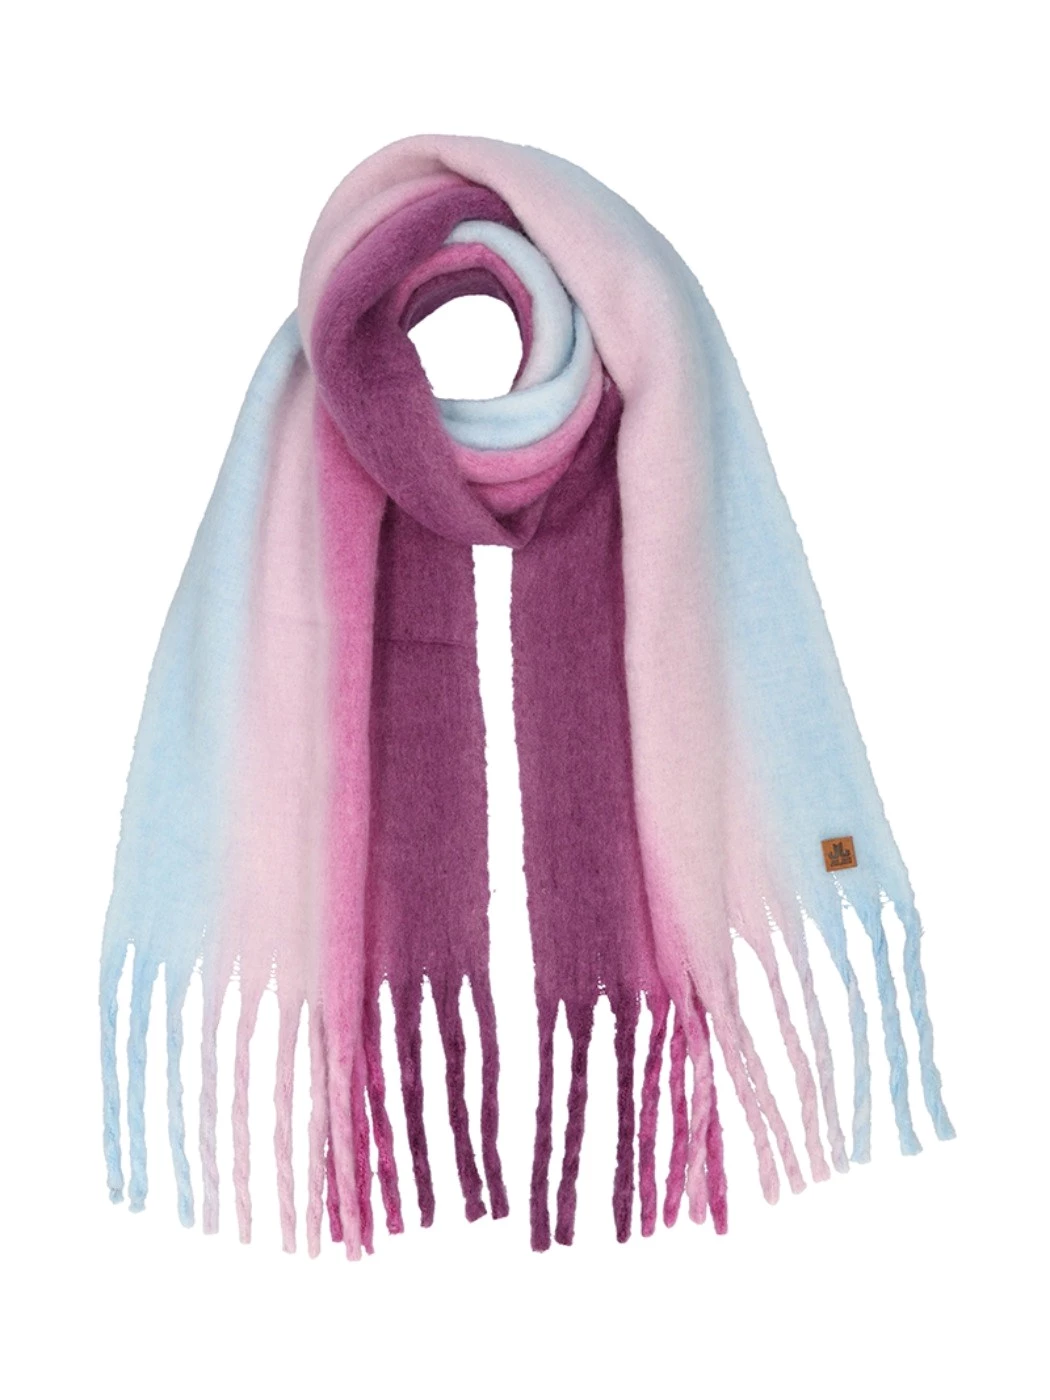 Mirage striped scarf